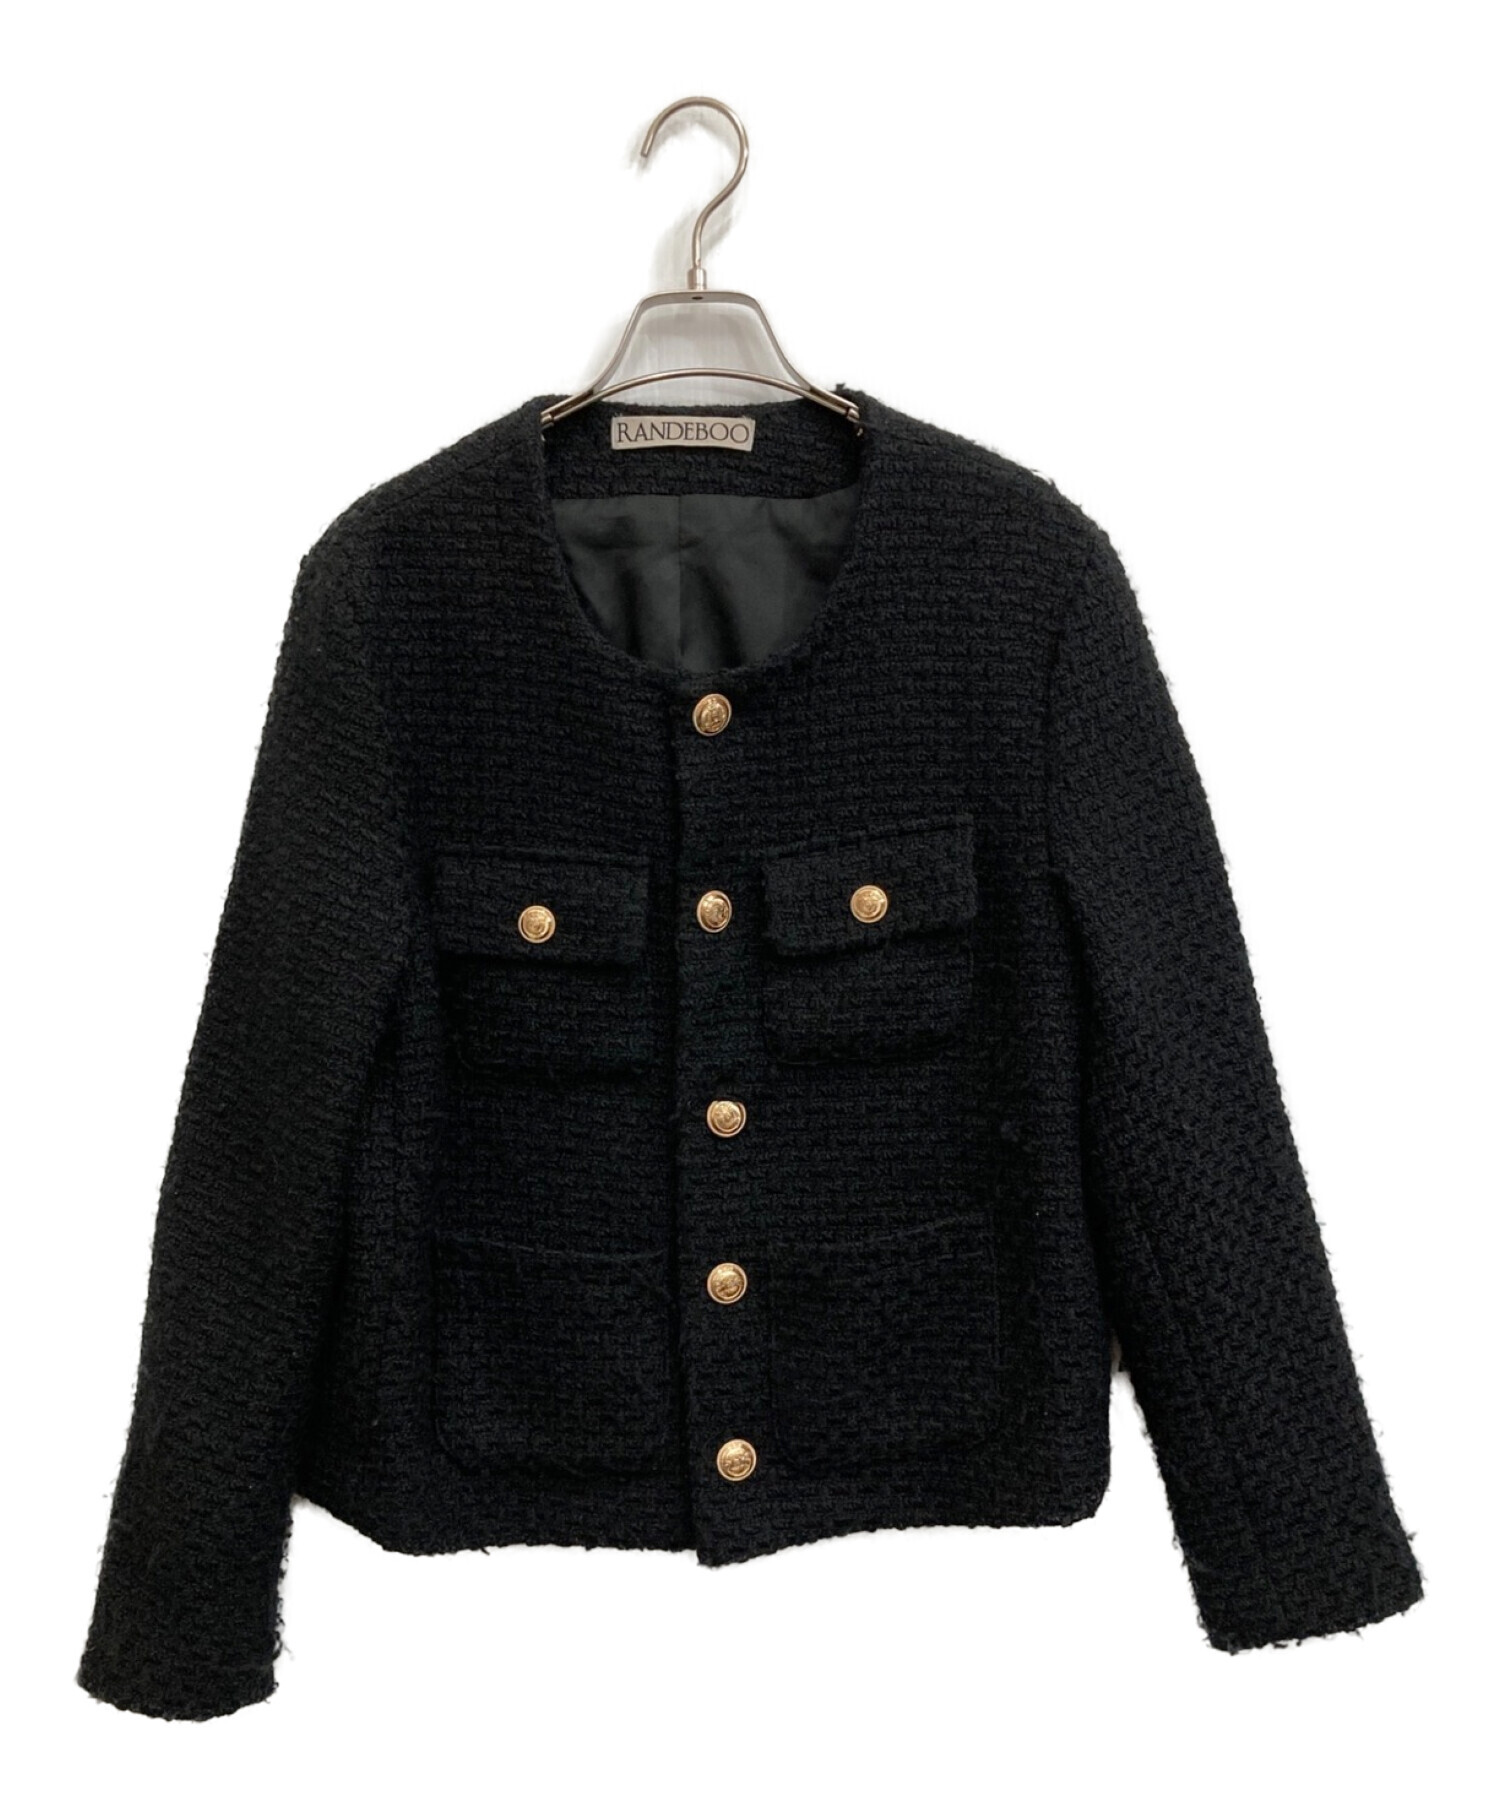 RANDEBOO (ランデブー) Classic tweed jacket ブラック サイズ:F